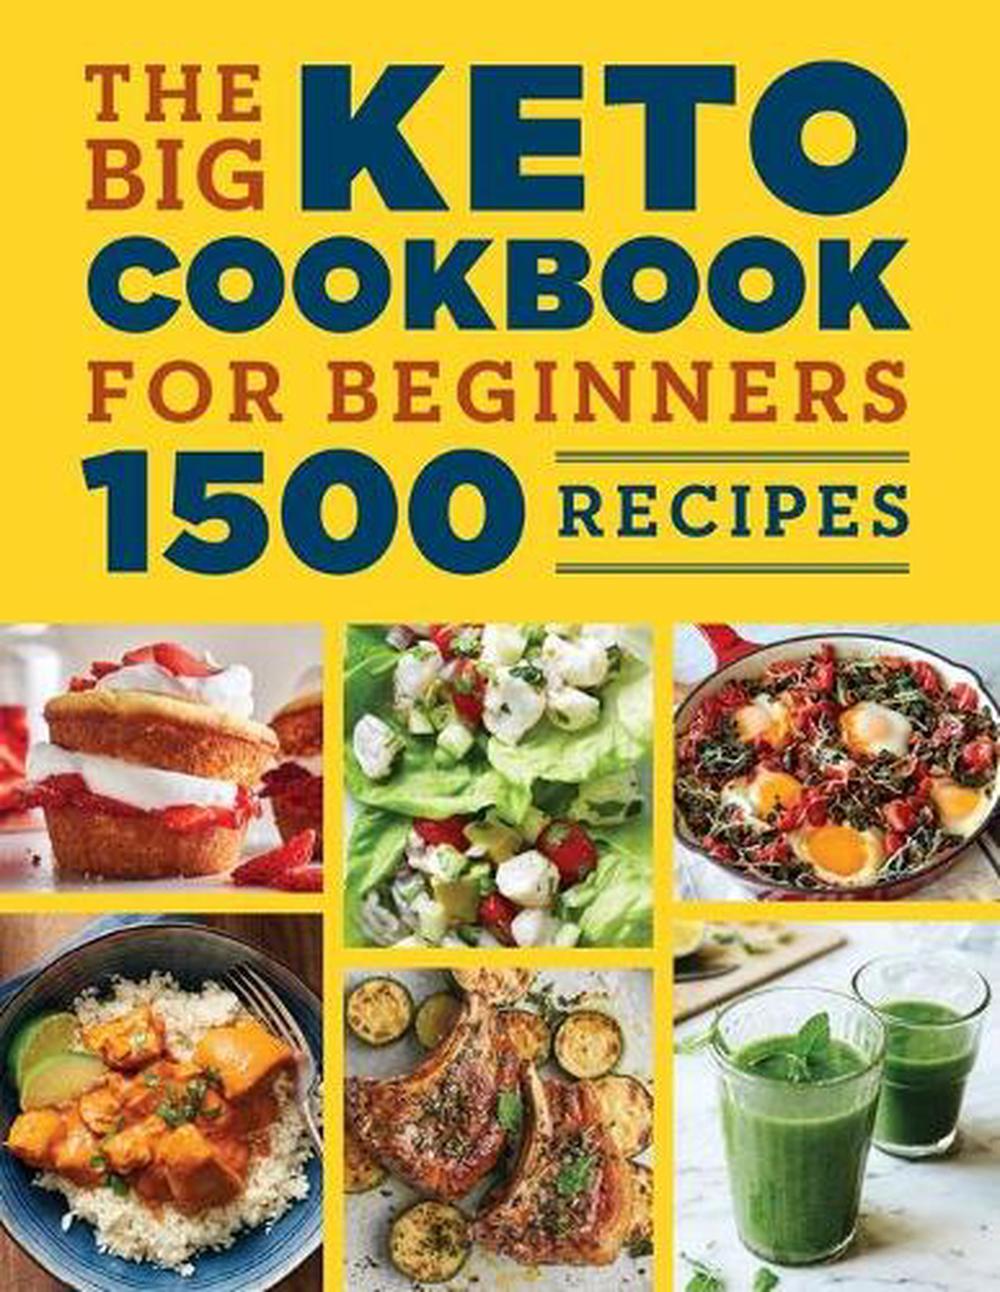 The Big Keto Cookbook for Beginners by Lightning Bolt Press, Paperback ...